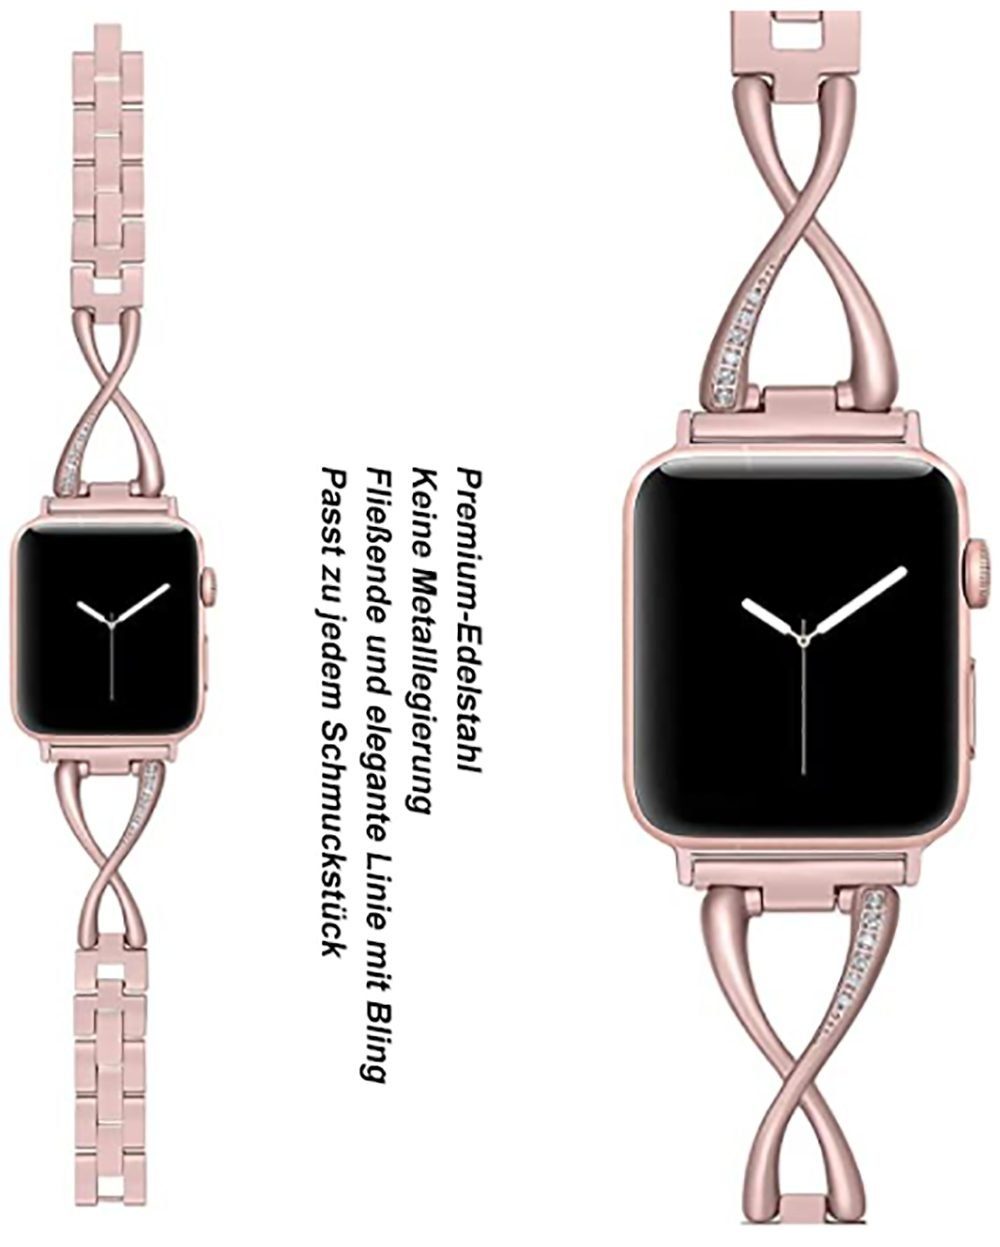 Diida 1-7,rosa,38/40mm Watch Smartwatch-Armband watch apple Band,Uhrenarmbänder,für